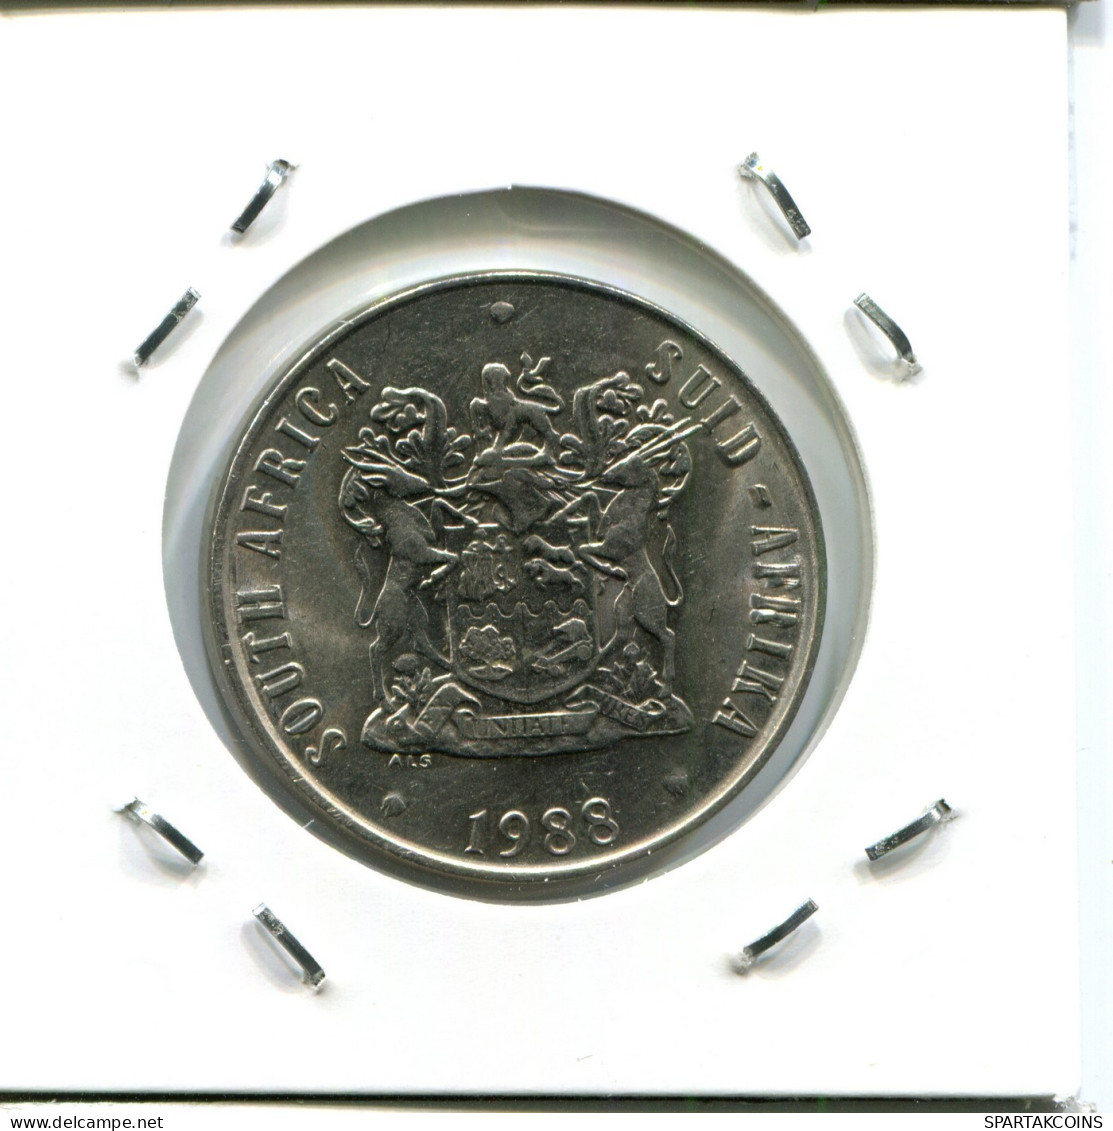 50 CENTS 1988 SUDAFRICA SOUTH AFRICA Moneda #AX204.E.A - Zuid-Afrika